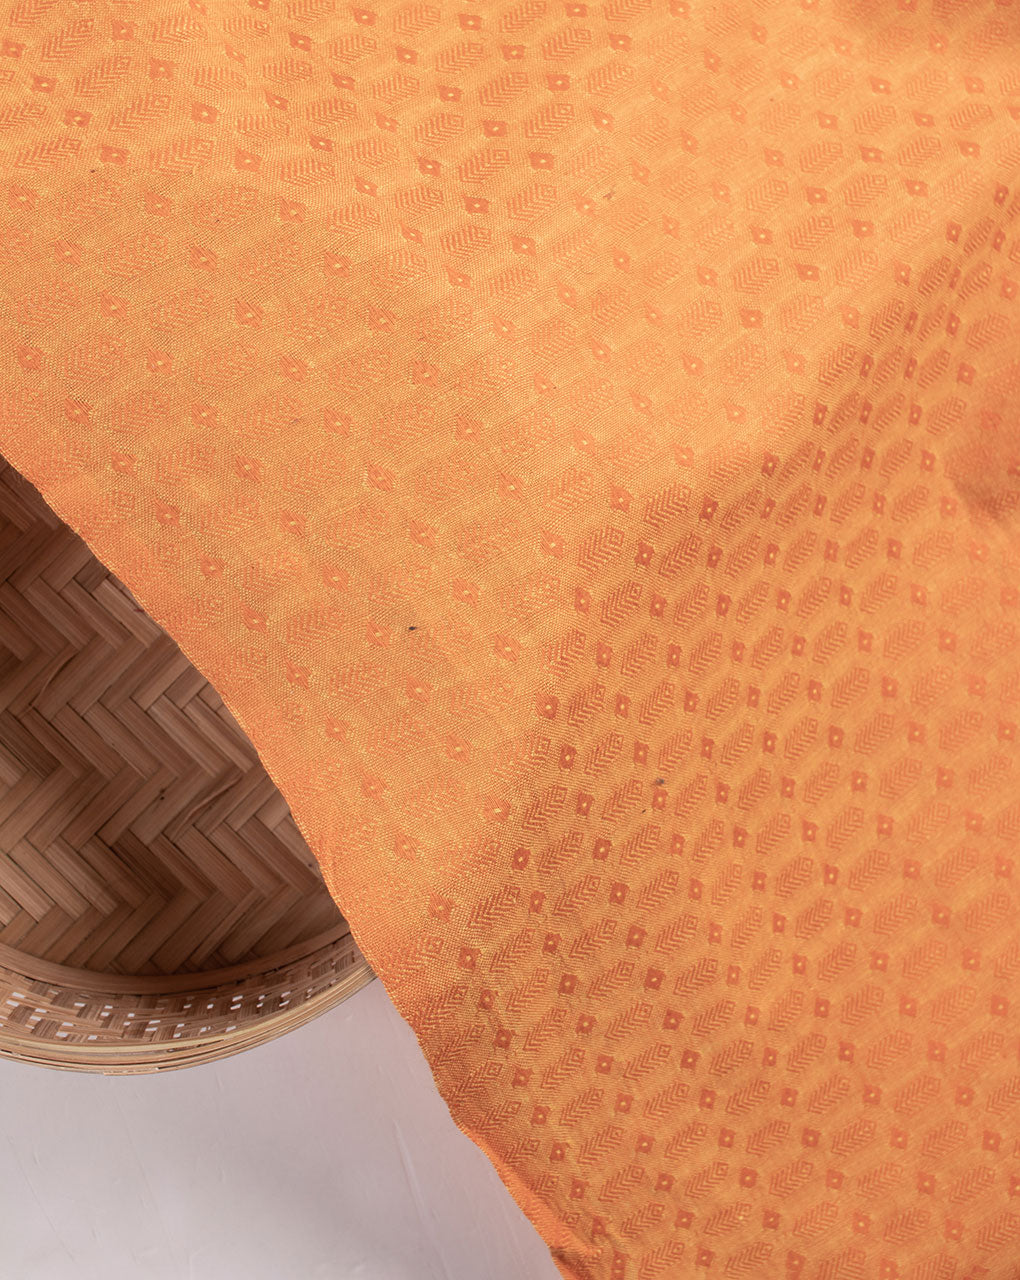 Dobby Loom Textured Cotton Fabric - Fabriclore.com